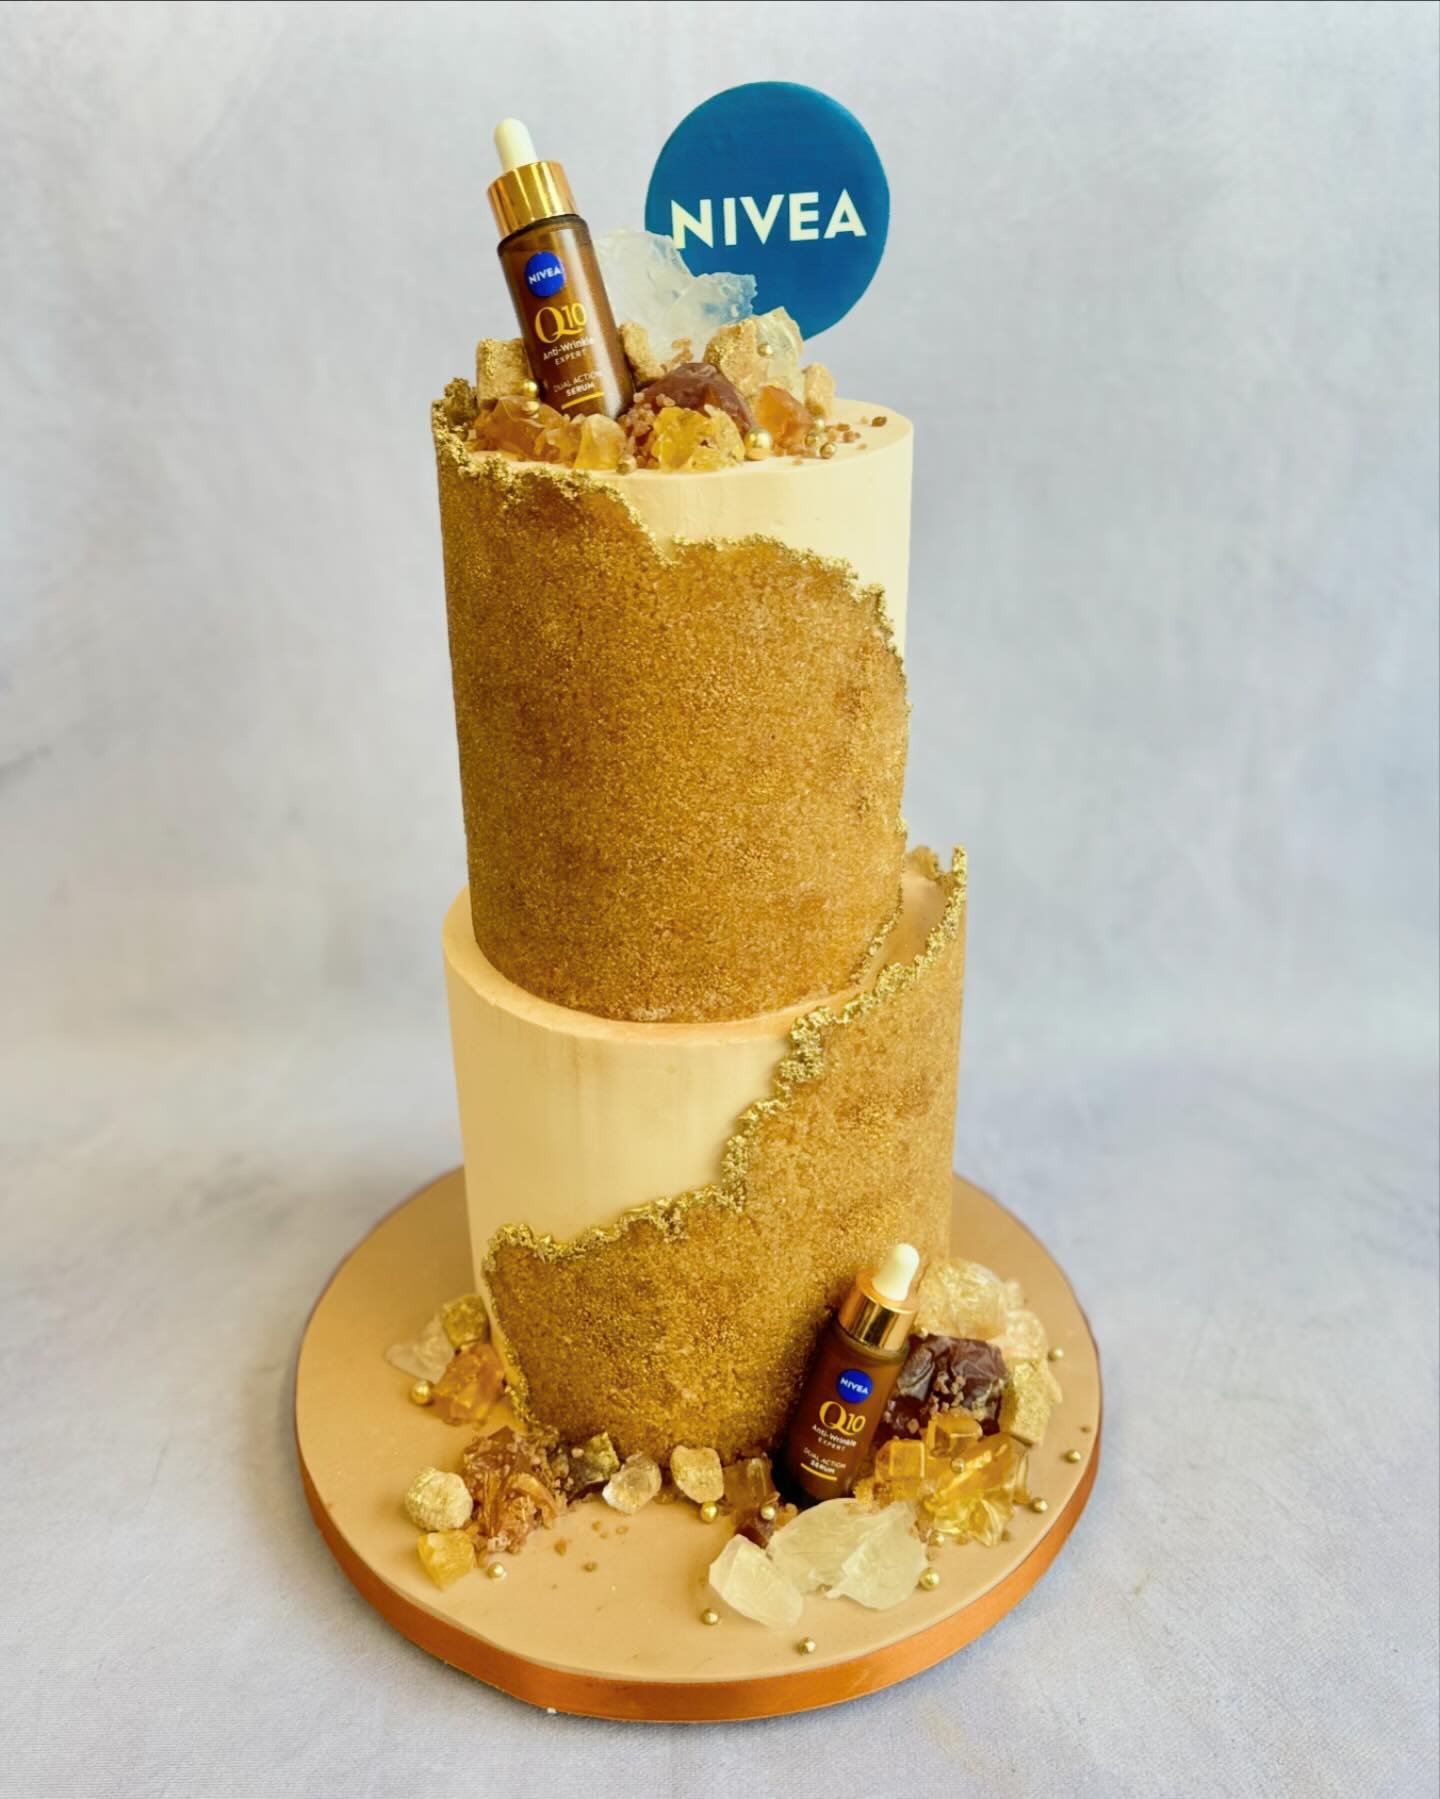 Super sweet sugar wrap cake for @nivea_uk to promote their Q10 Anti-Wrinkle Serum.

With matching sugar dipped cakepops ✨✨✨

.
#cake #cakeart #sugarcake #sugarwrapcake #brands #branding #brandidentity #brandstrategy #brandmarketing #marketingstrategy